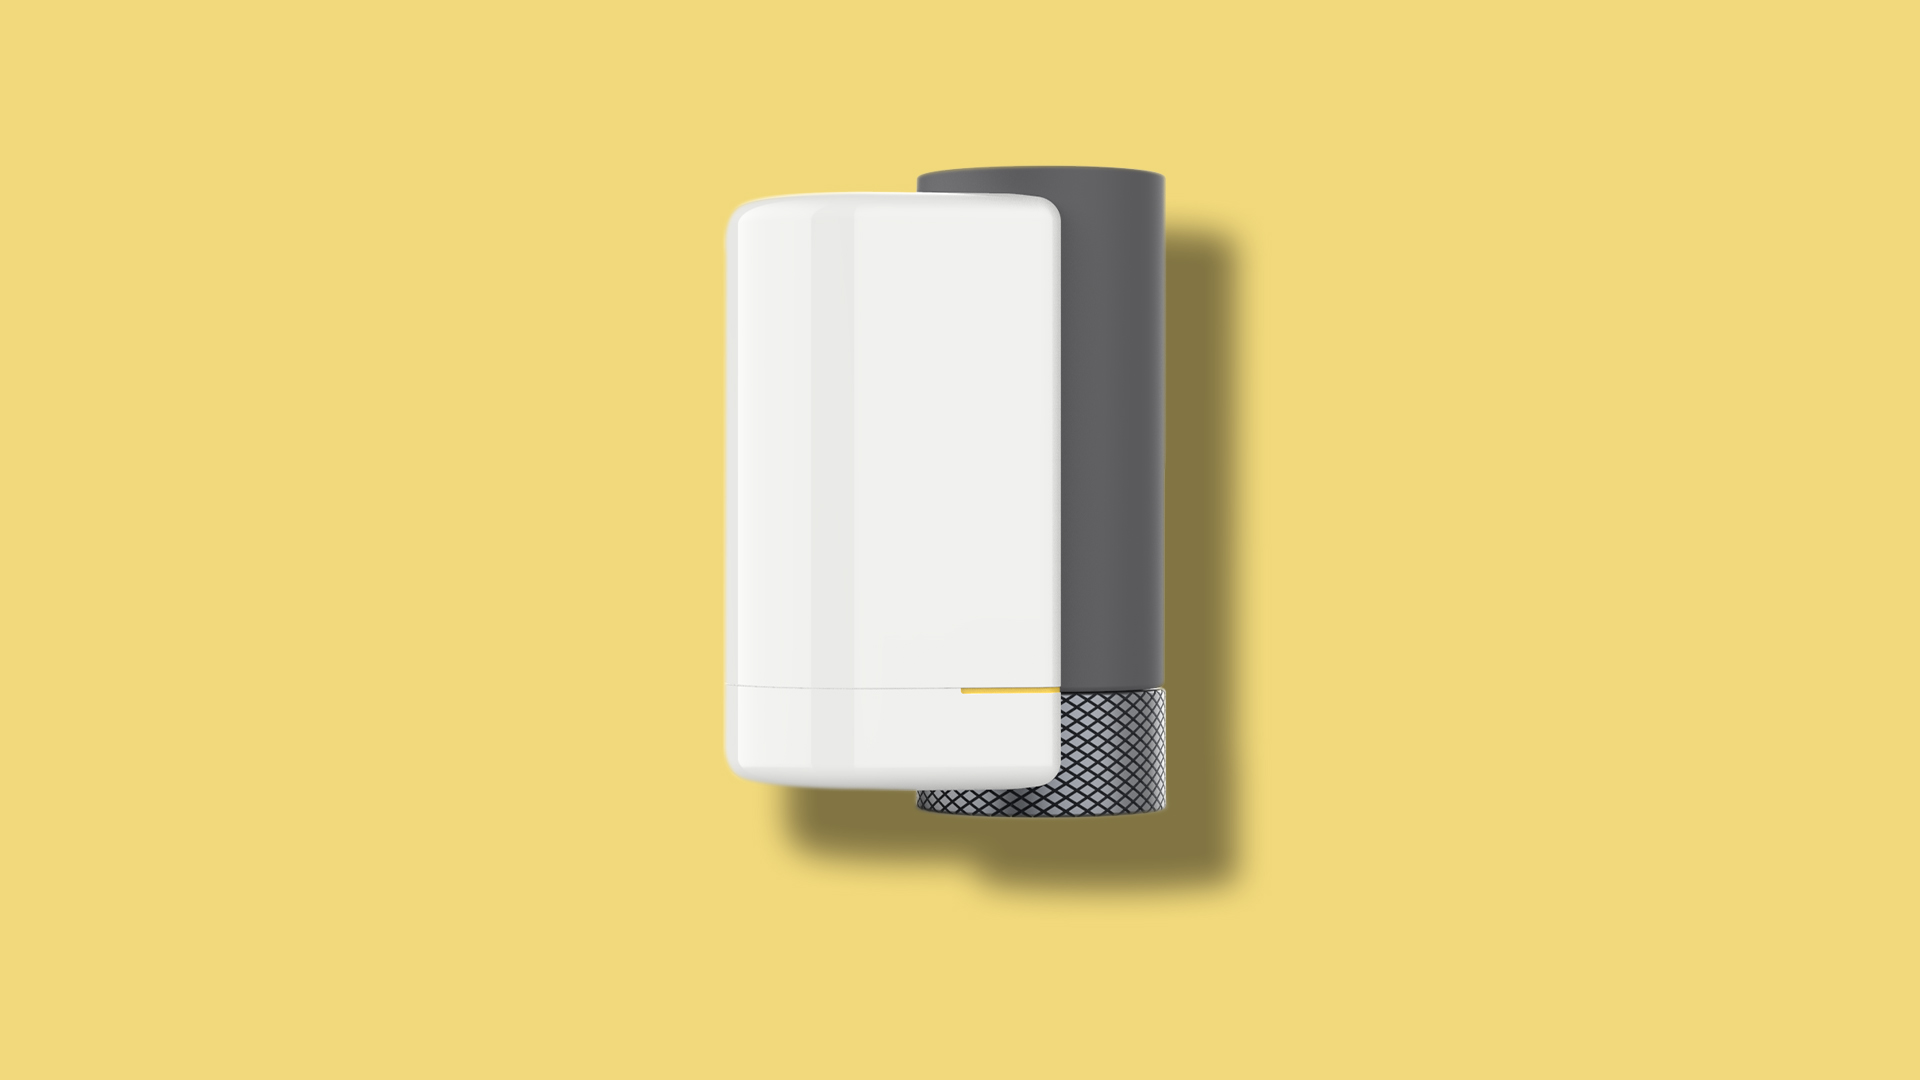 Therm - Smart radiator thermostat